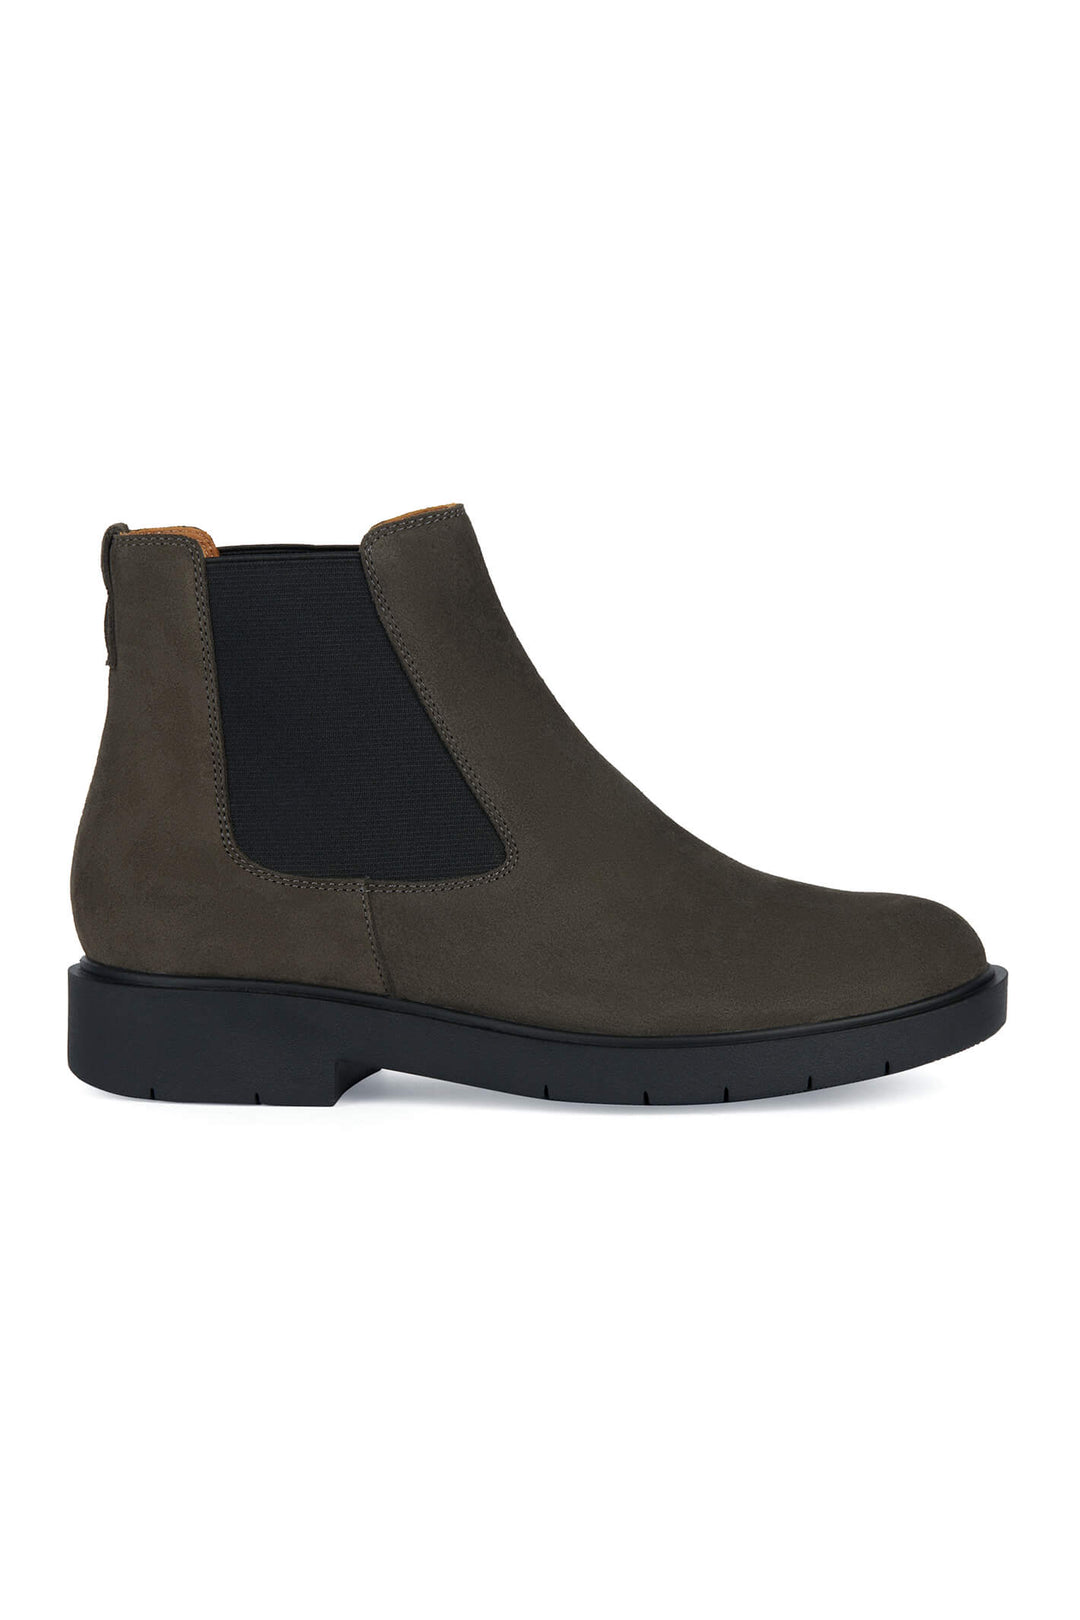 Geox Spherica EC1 D16QRC00022 Grey Suede Ankle Boots - Shirley Allum Boutique